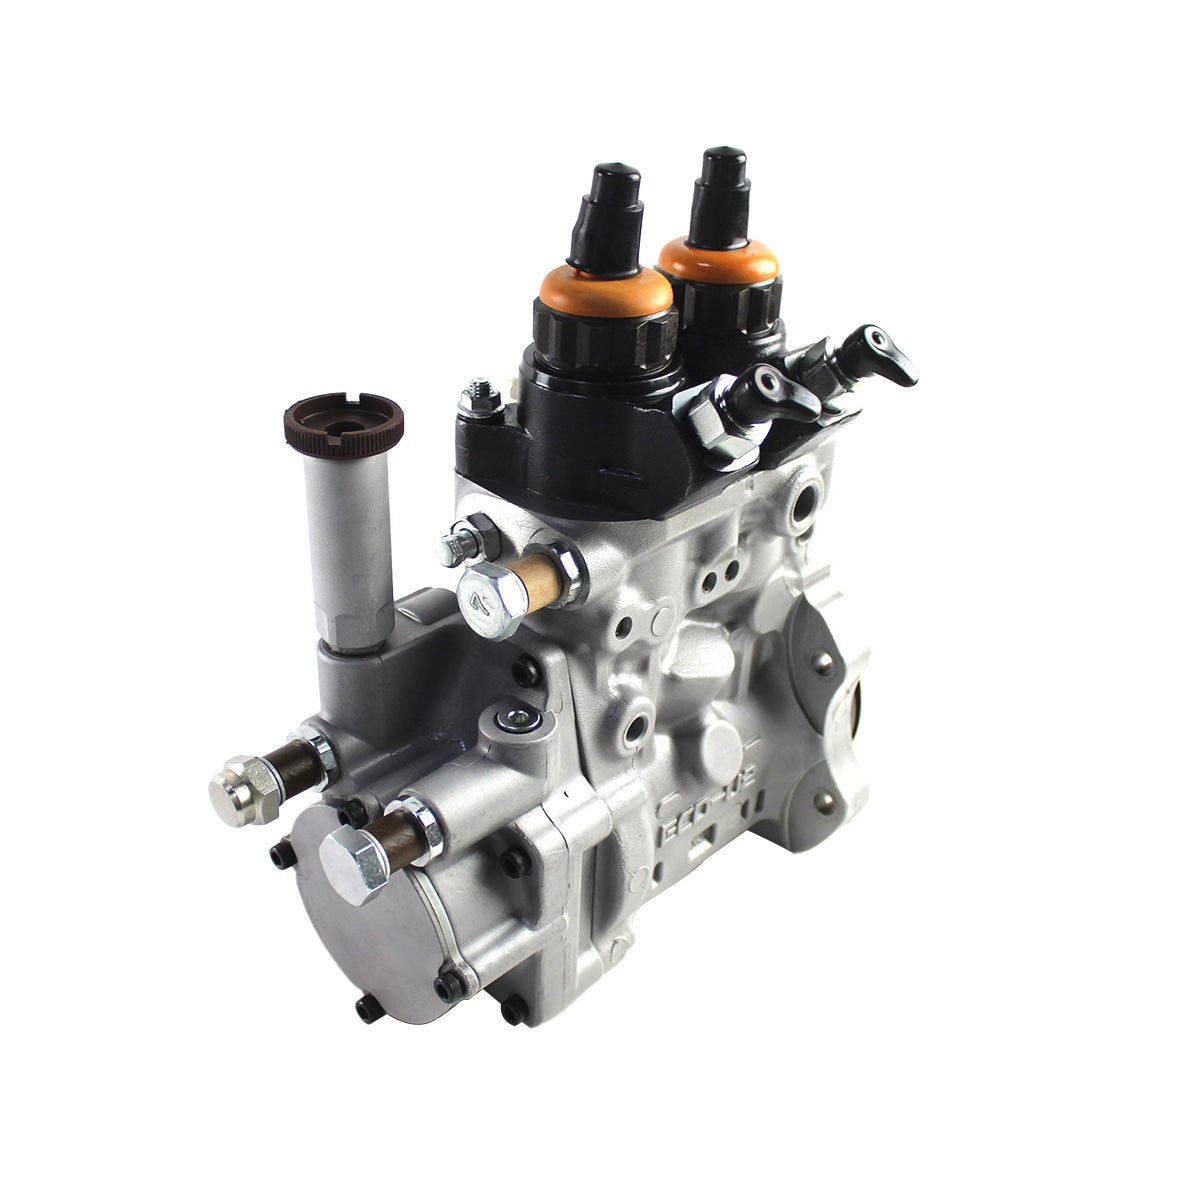 6261-71-1111 094000-0582 Fuel Injection Pump for Komatsu WA500-6 PC880-8E0 - Sinocmp